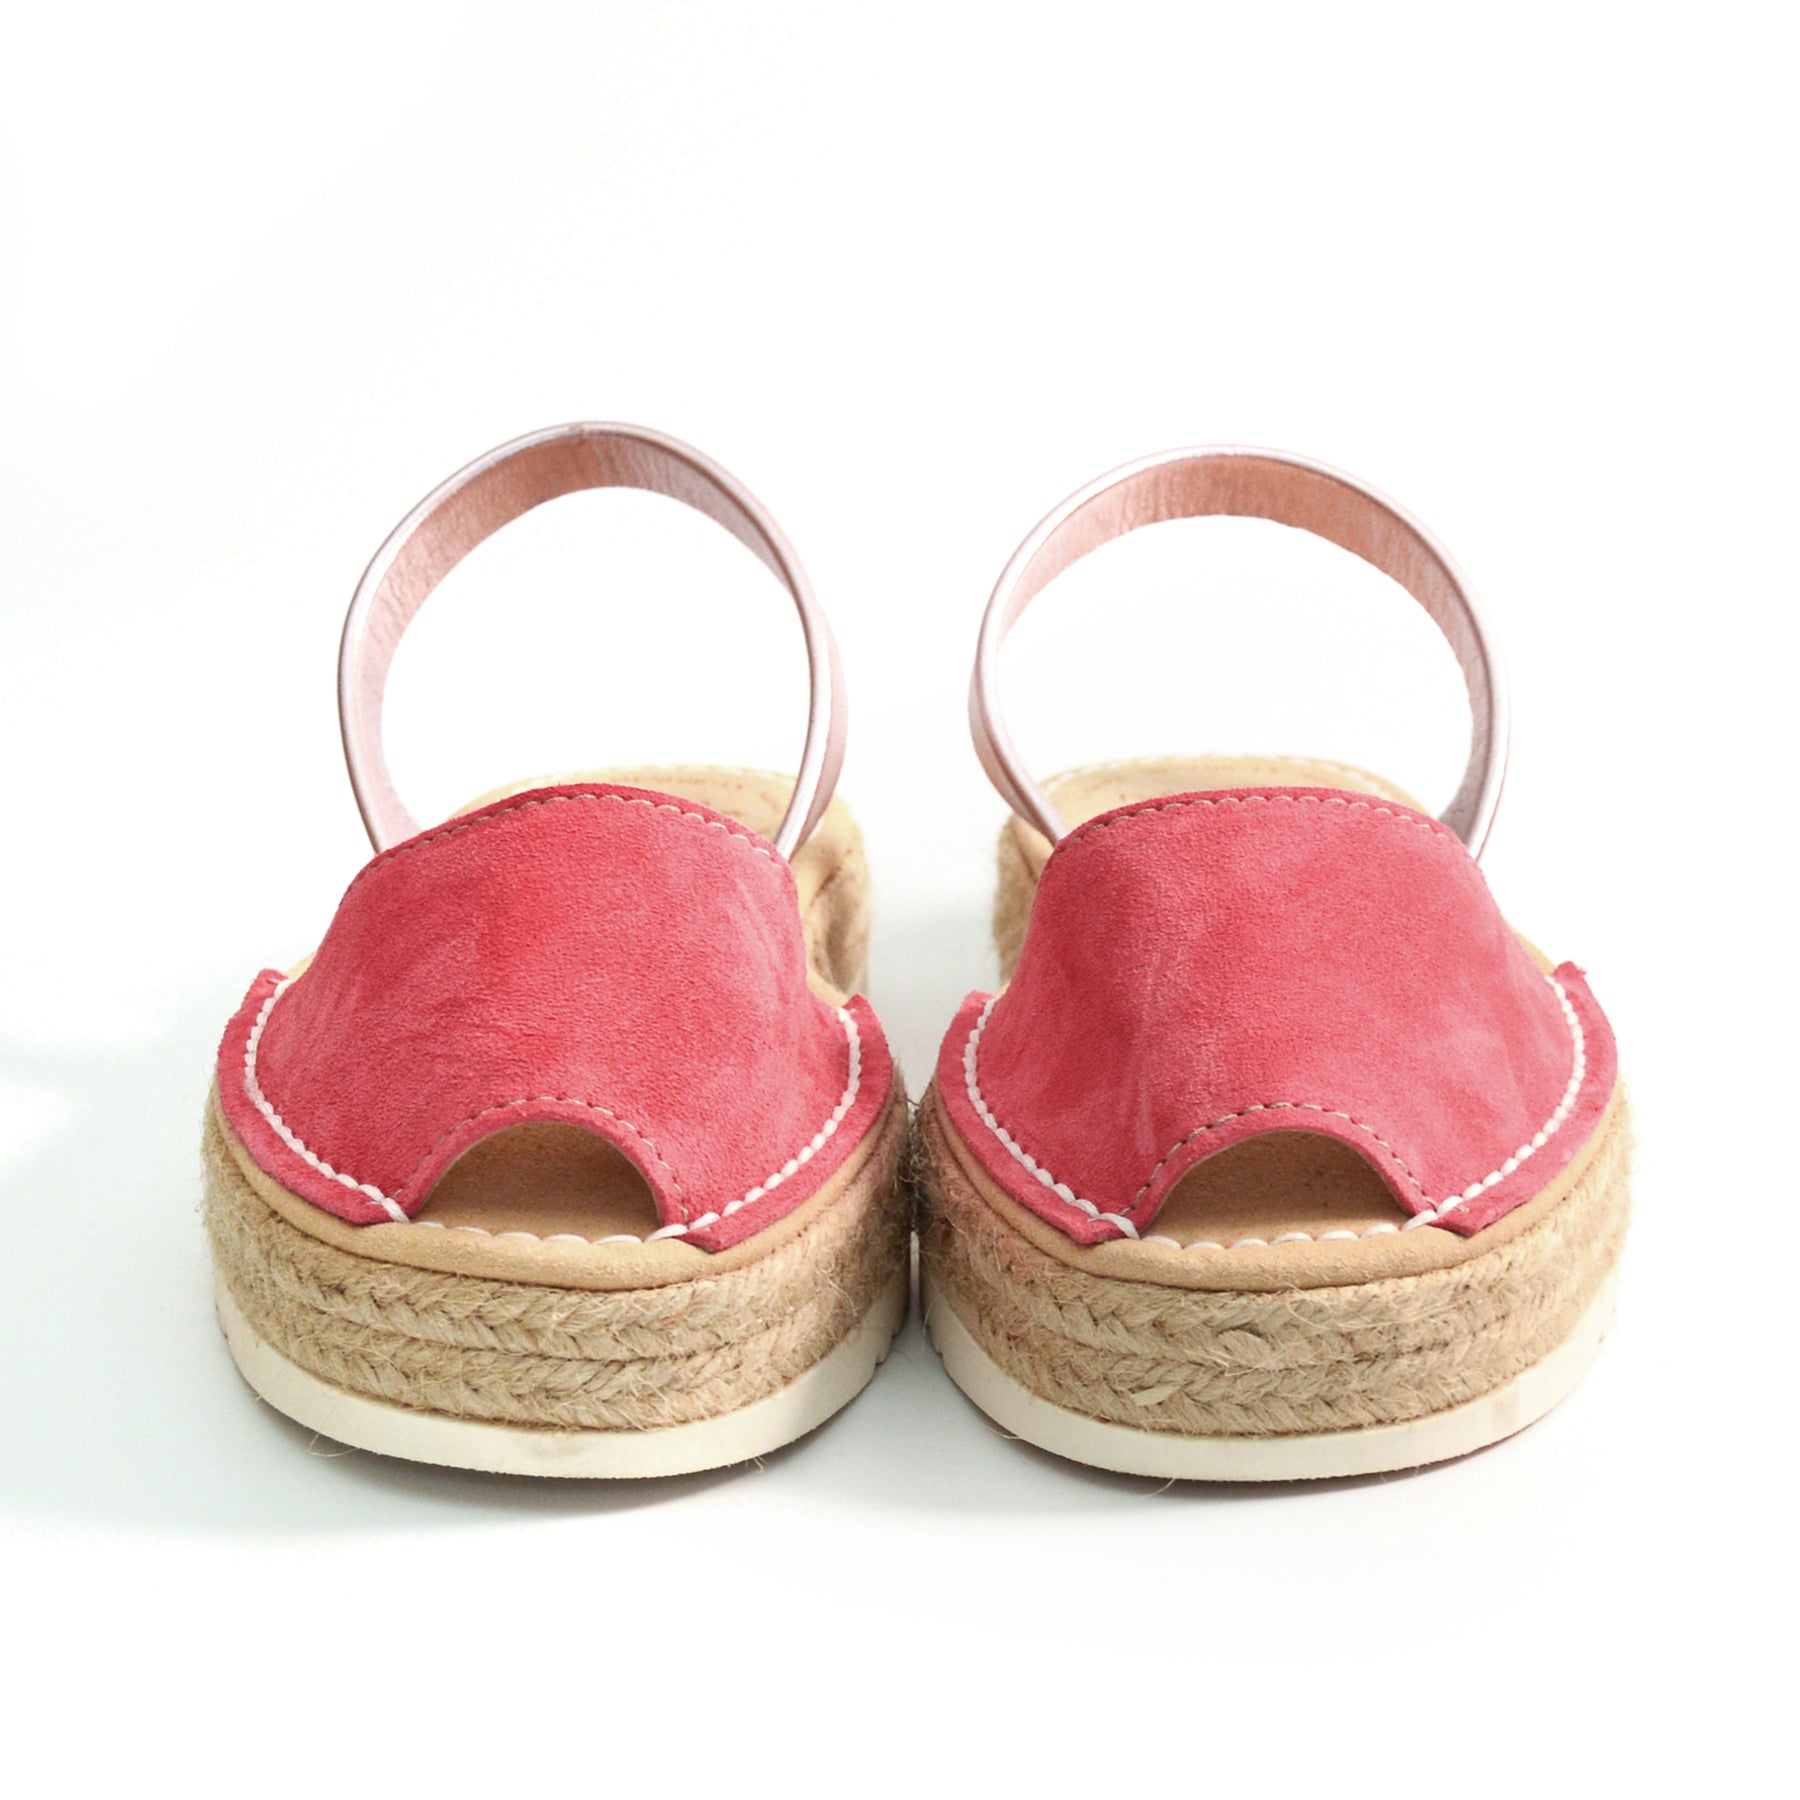 pink suede espadrille lowform avarca menorcan spanish sandals